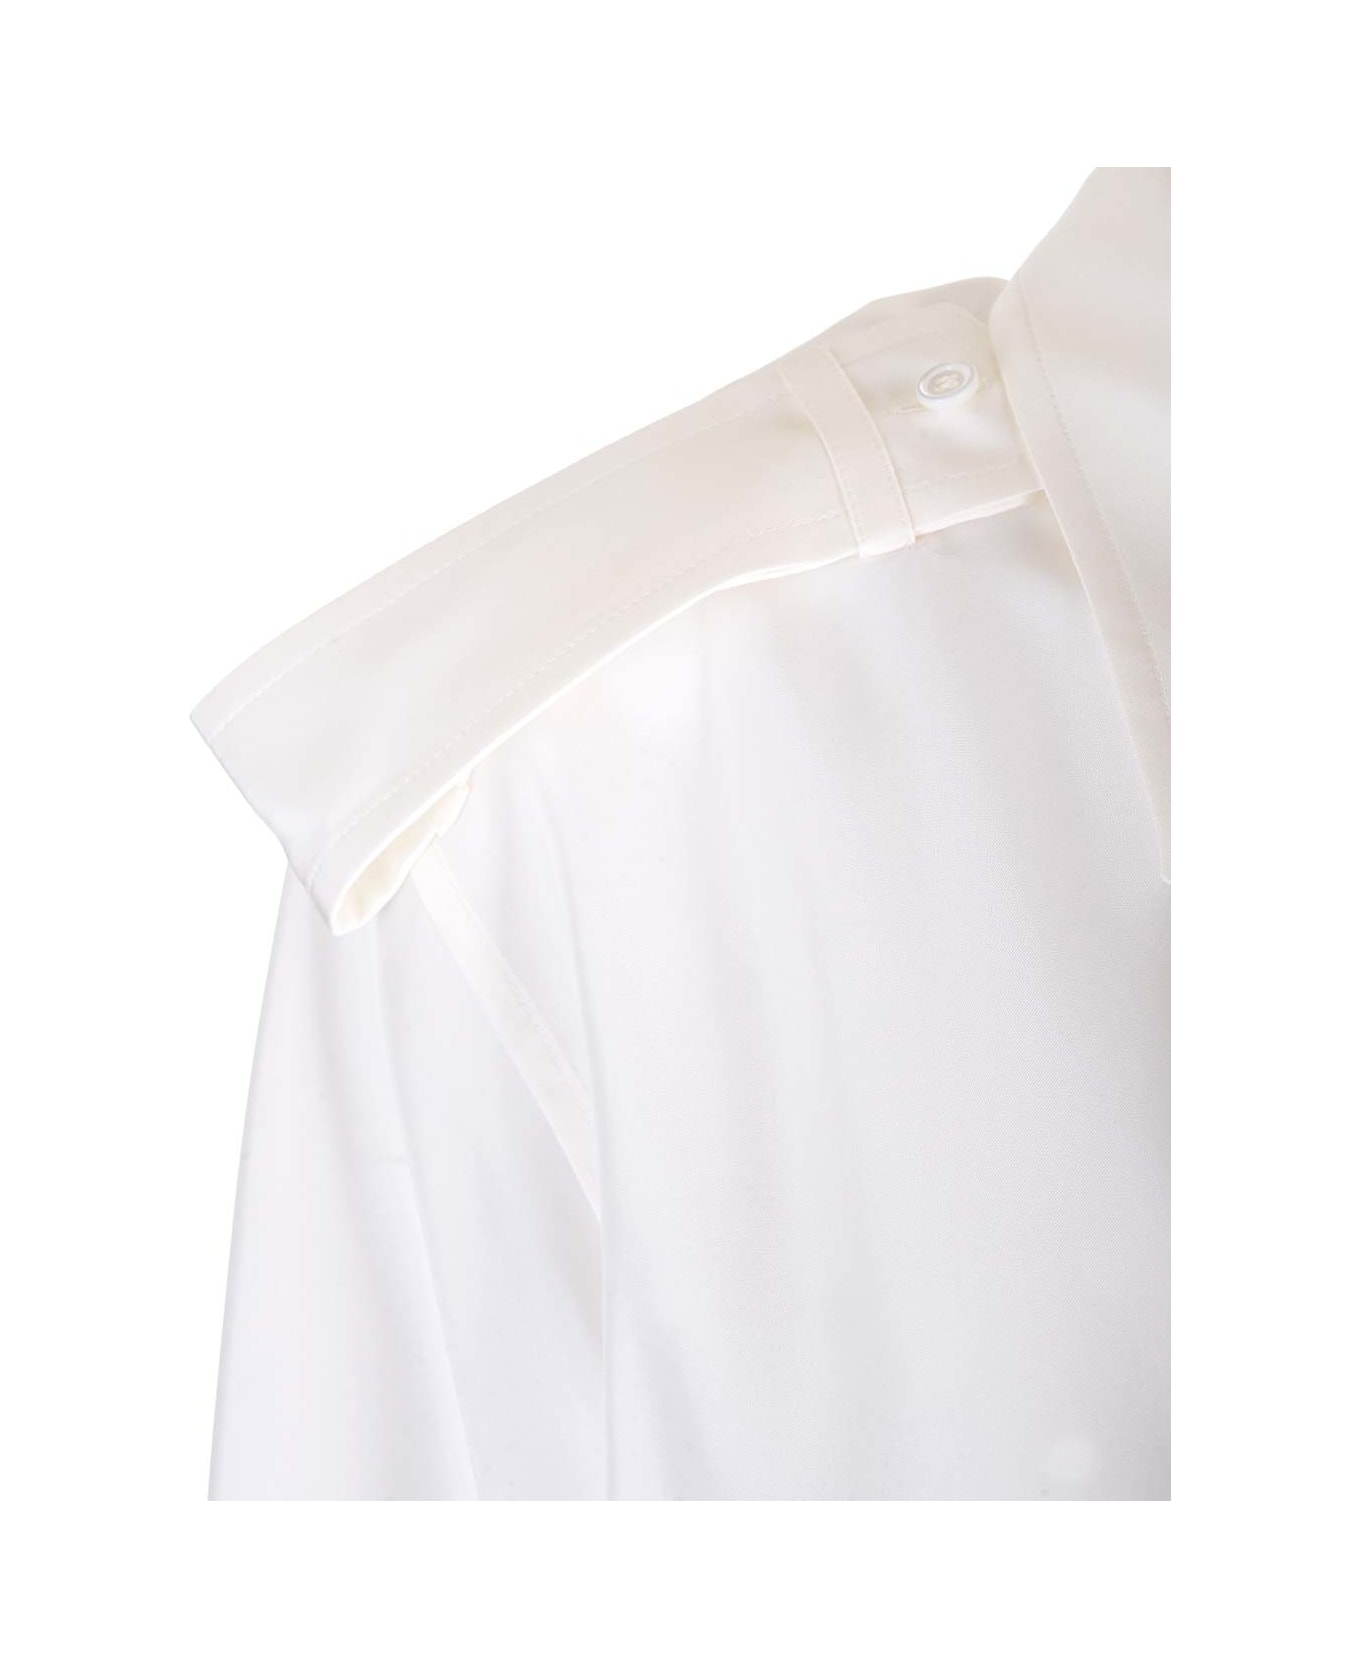 Burberry White Silk Shirt - WHITE